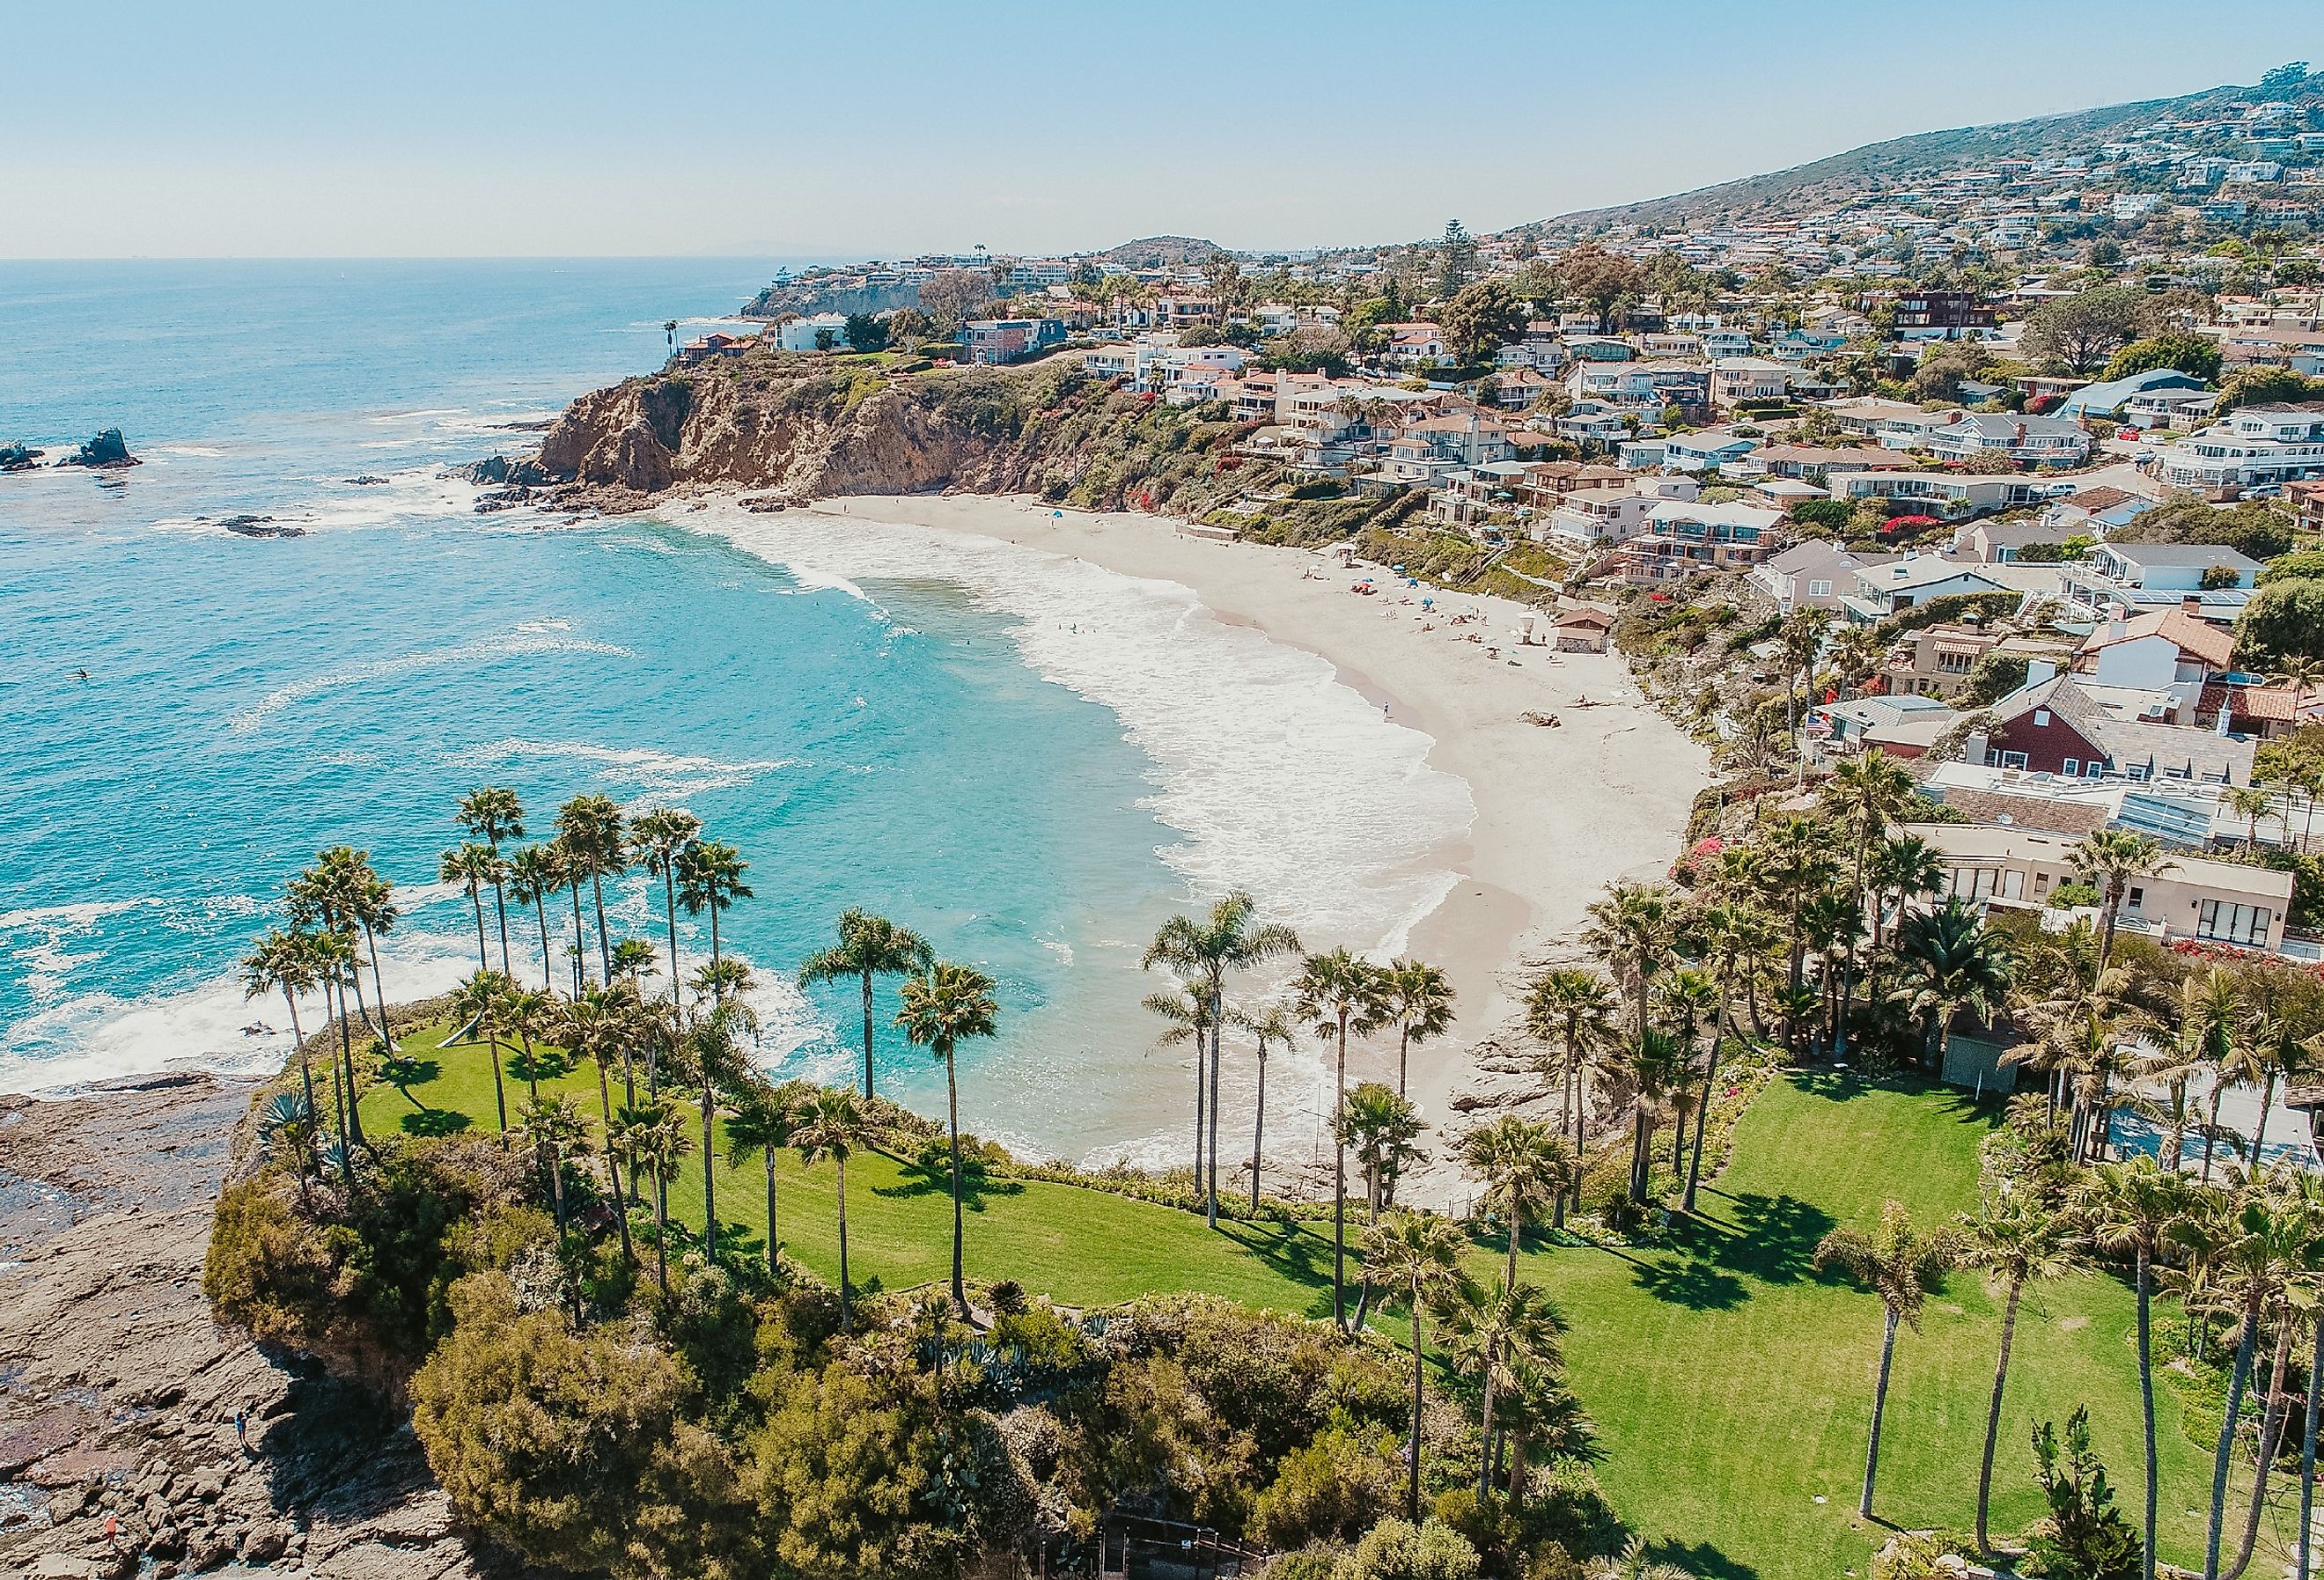 Overlooking the beautiful town of Laguna Beach, California.